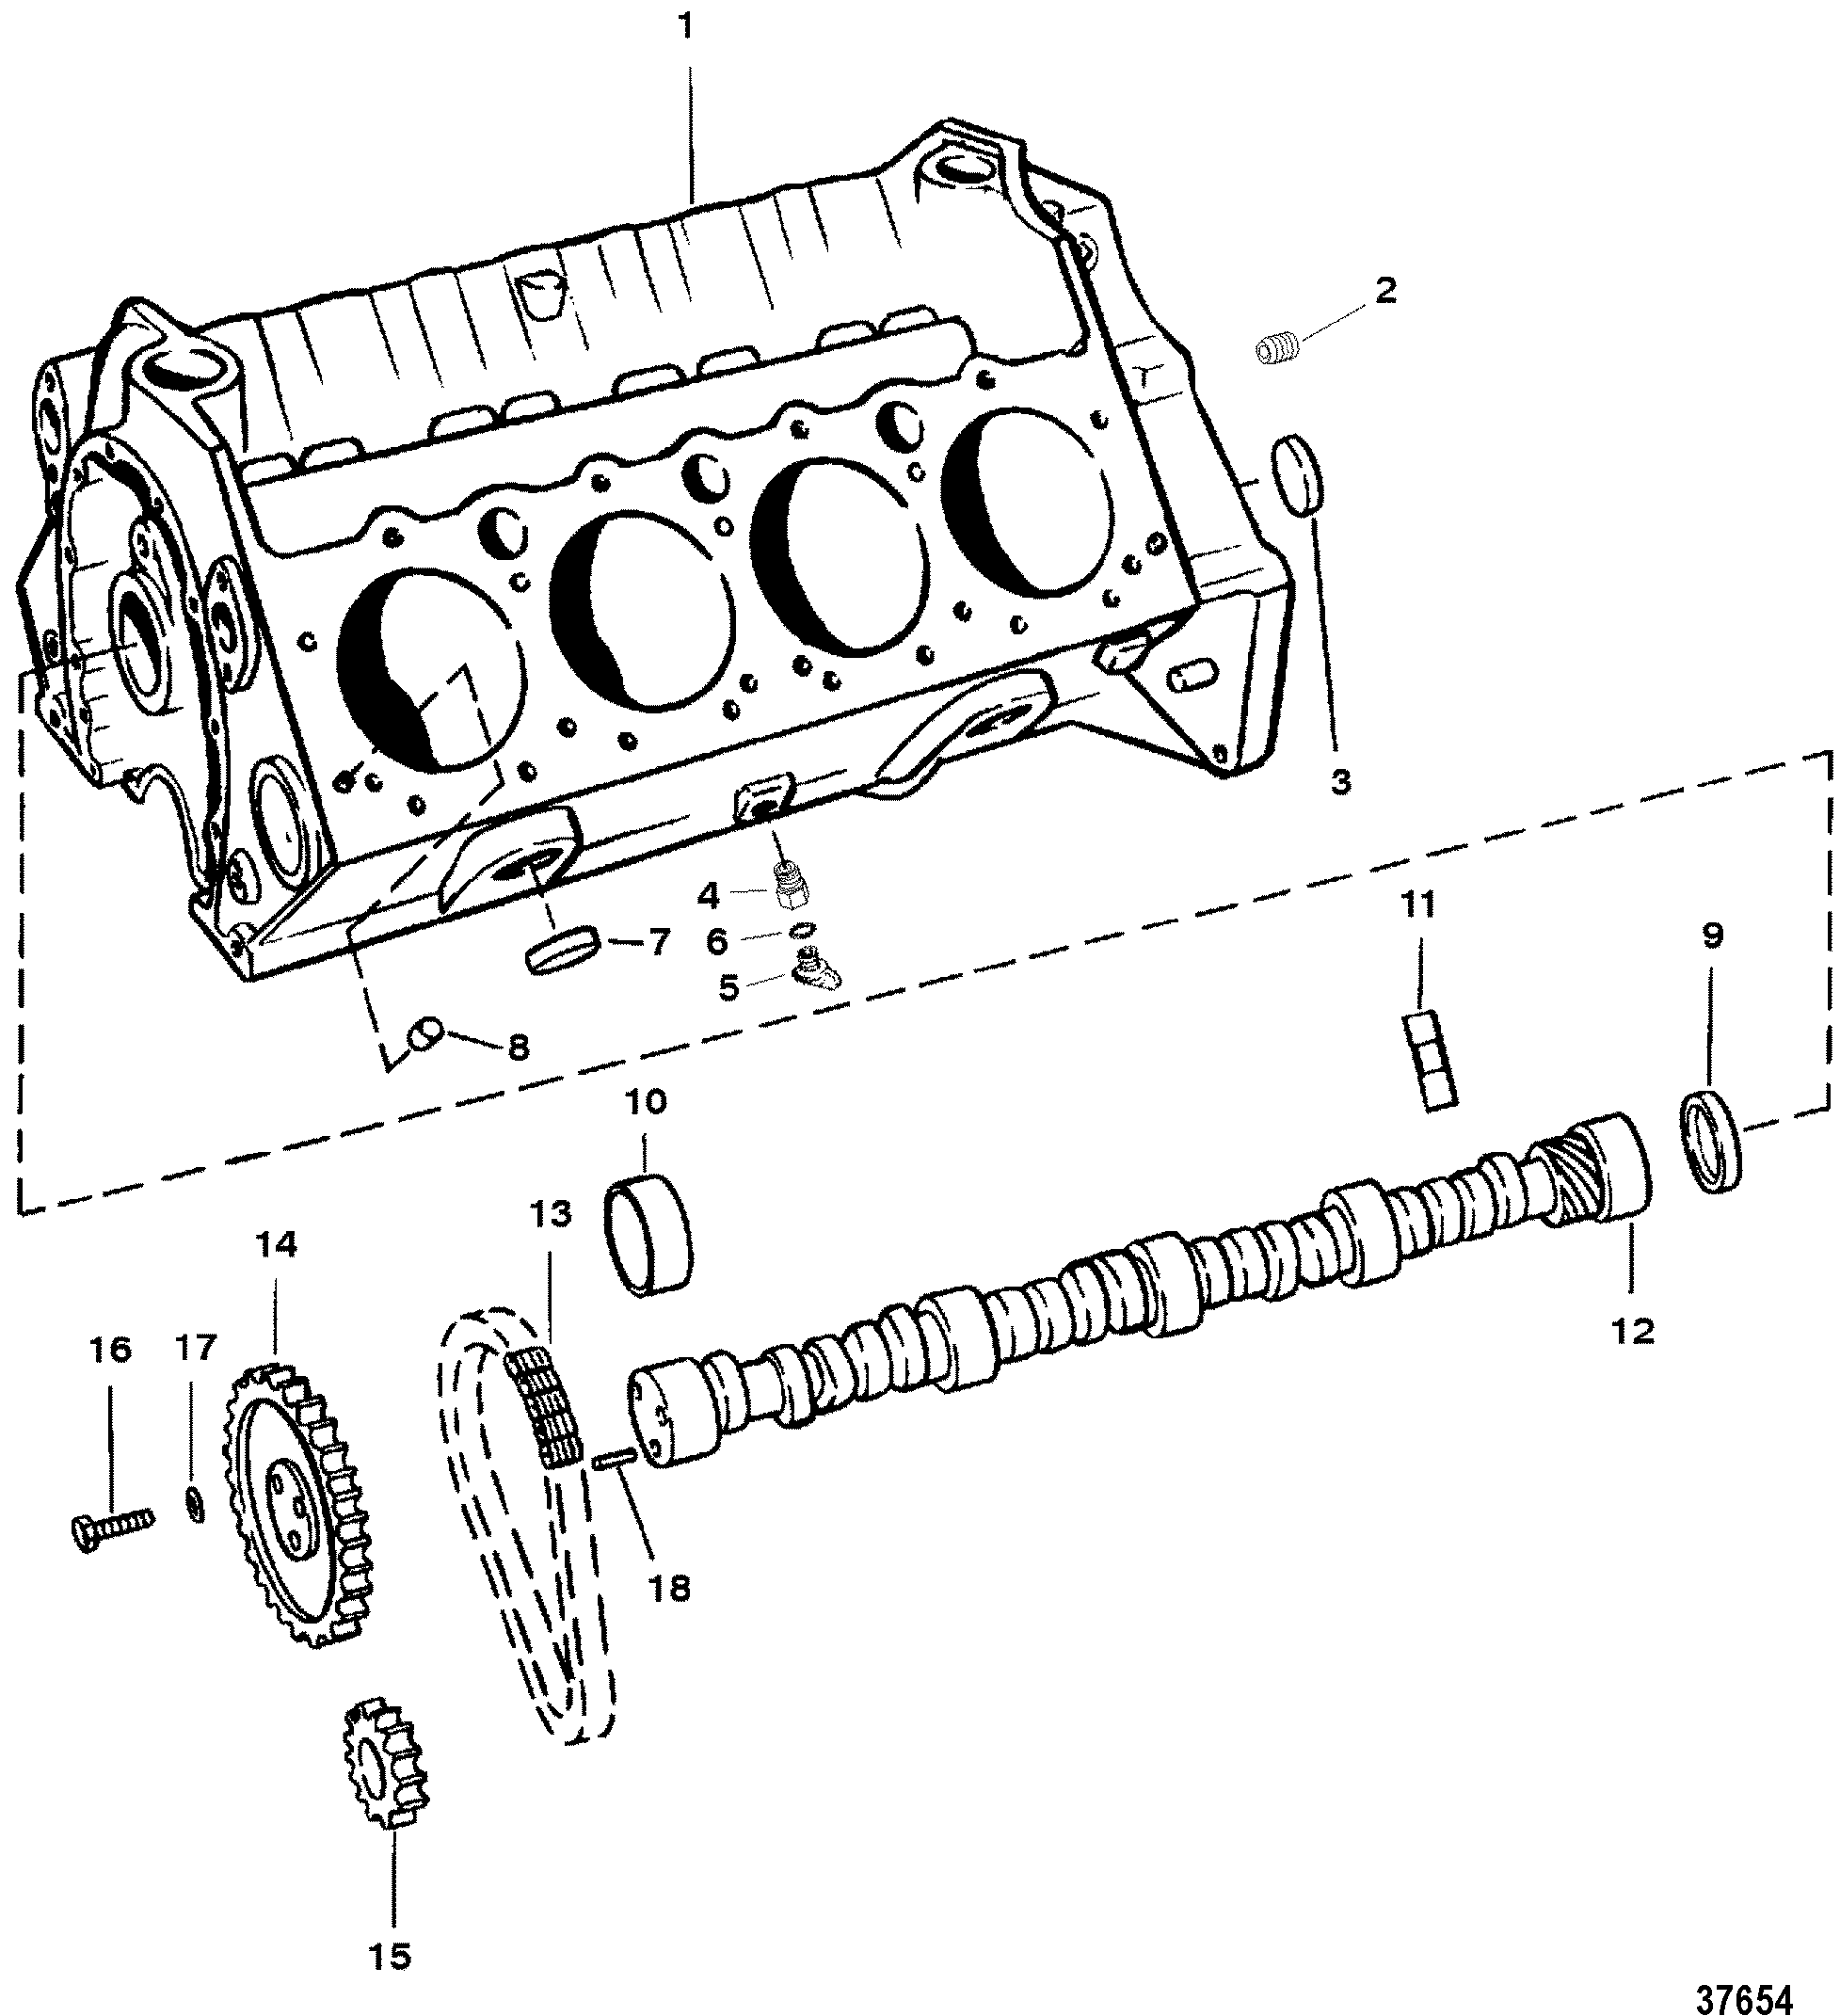 CYLINDER BLOCK AND CAMSHAFT(350 C.I.D. FLAT LIFTERS)